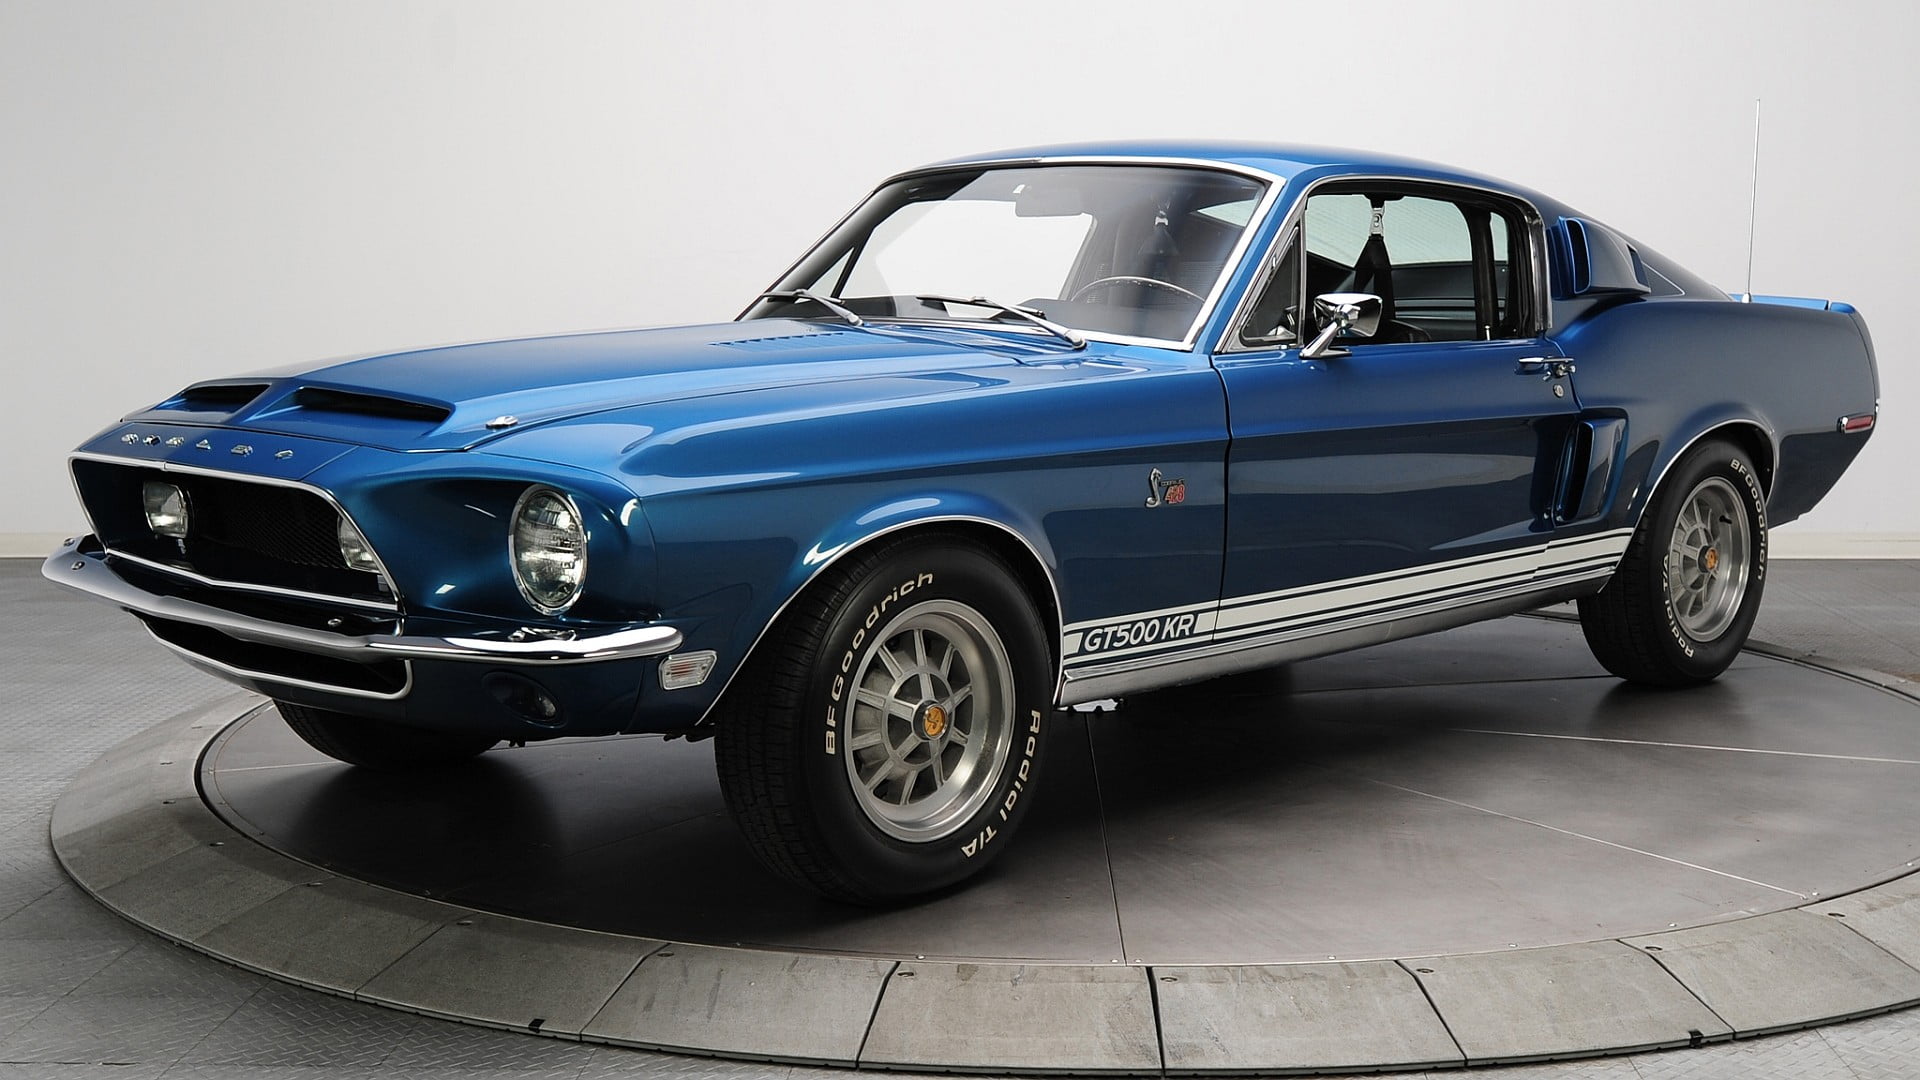 blue Ford Mustang, car, mode of transportation, motor vehicle